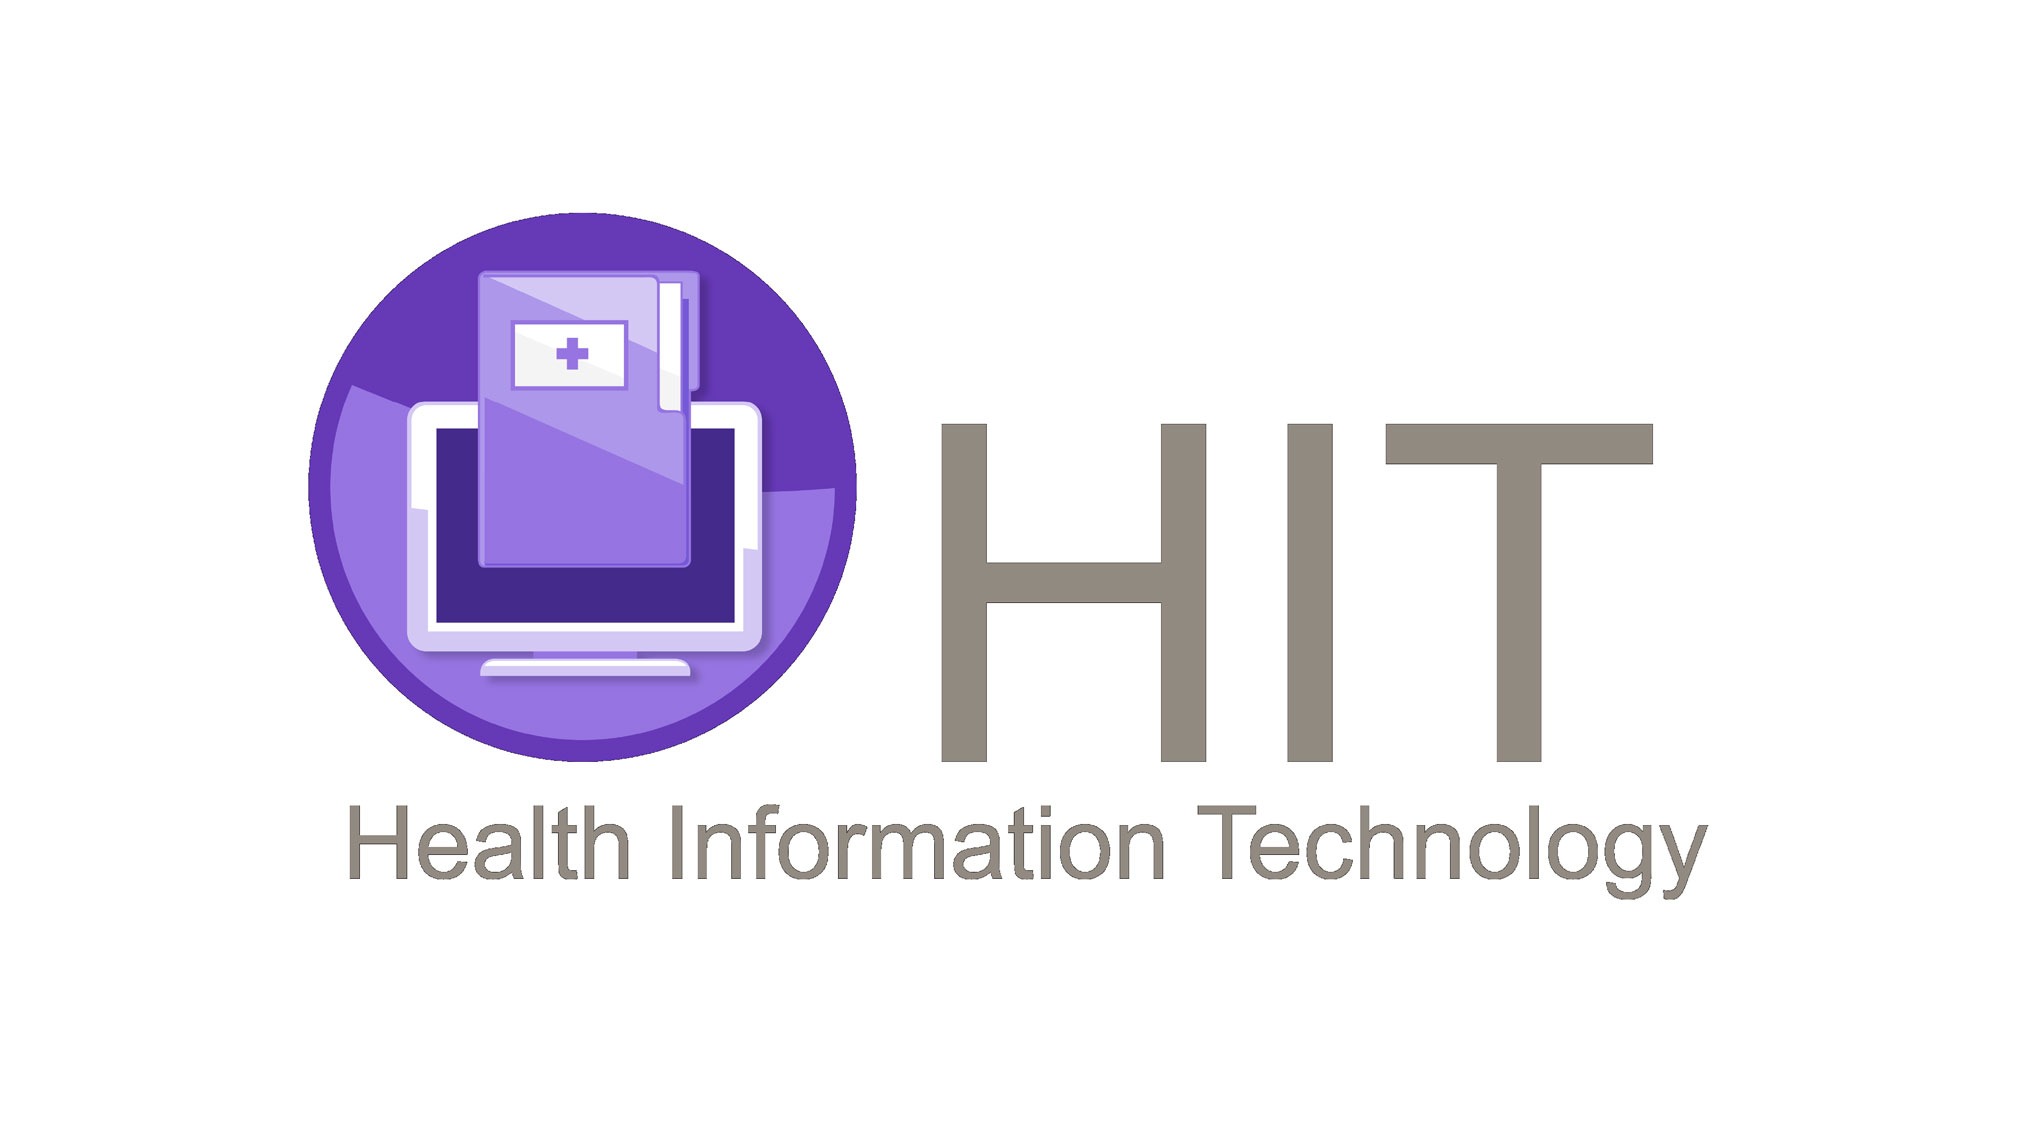 HEALTH INFORMATION TECHNOLOGY